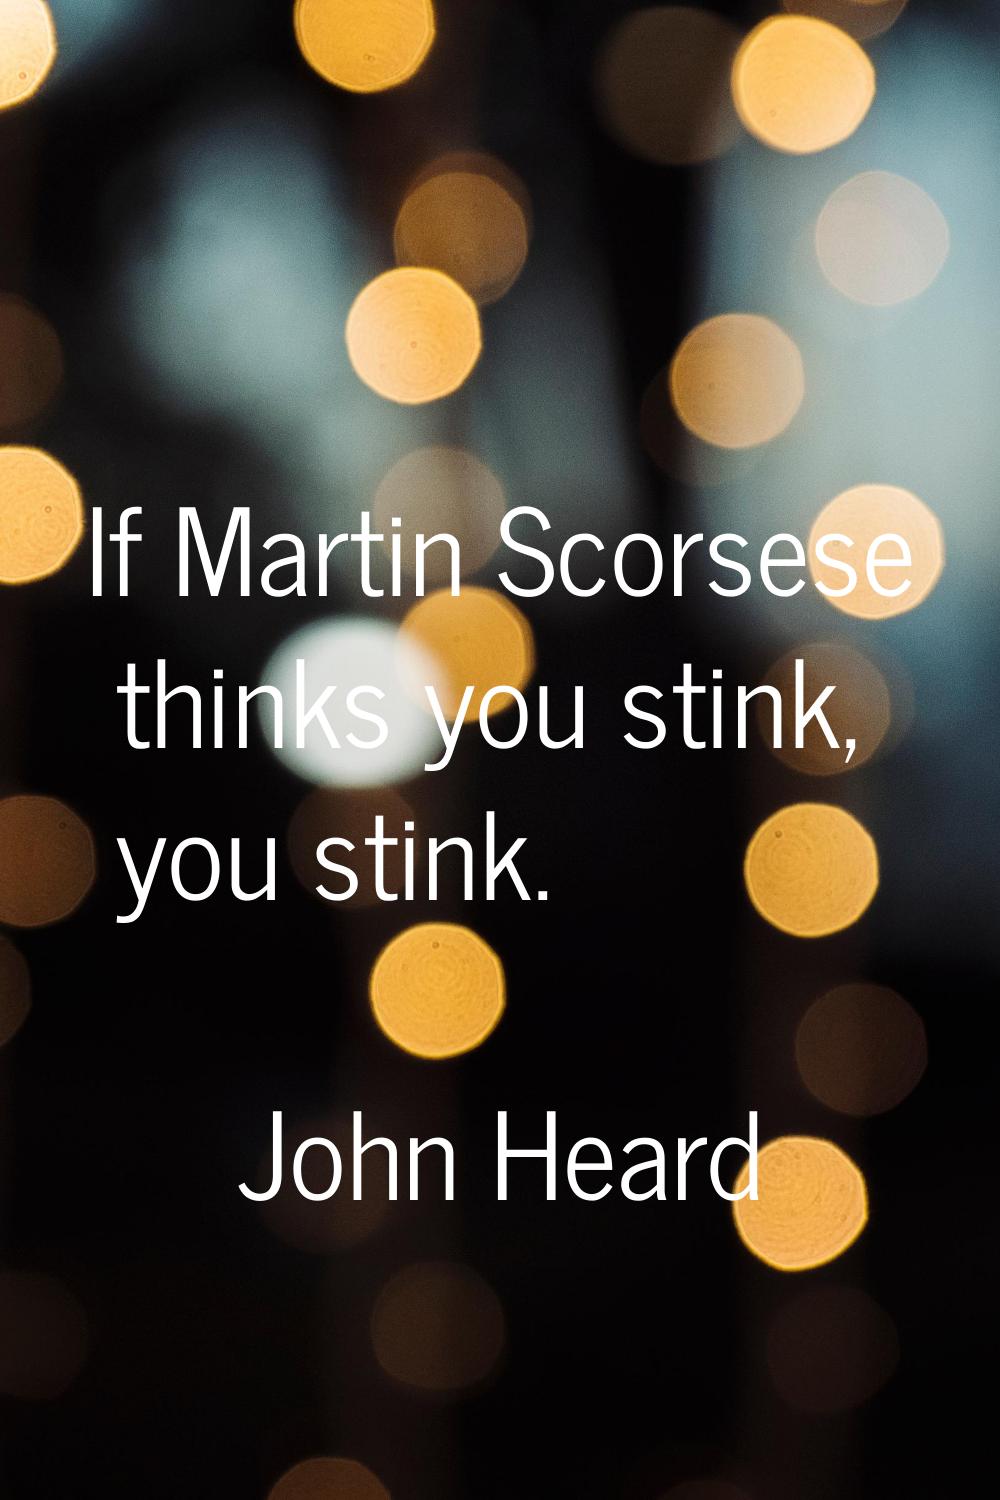 If Martin Scorsese thinks you stink, you stink.